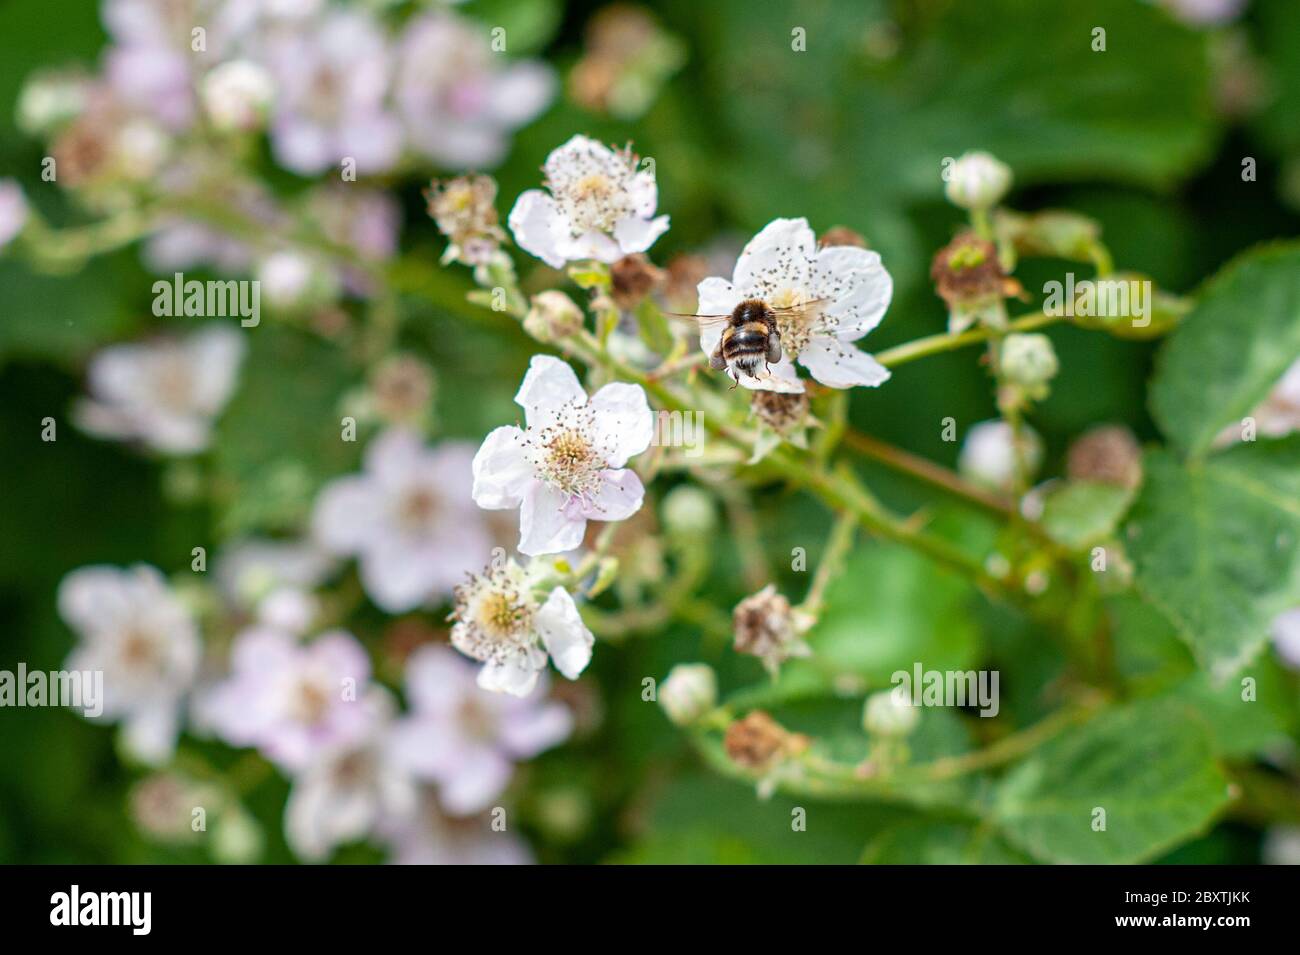 Bumblebee (Bombus terrestris) on pale pink flowers of a blackberry bush in June, UK Stock Photo